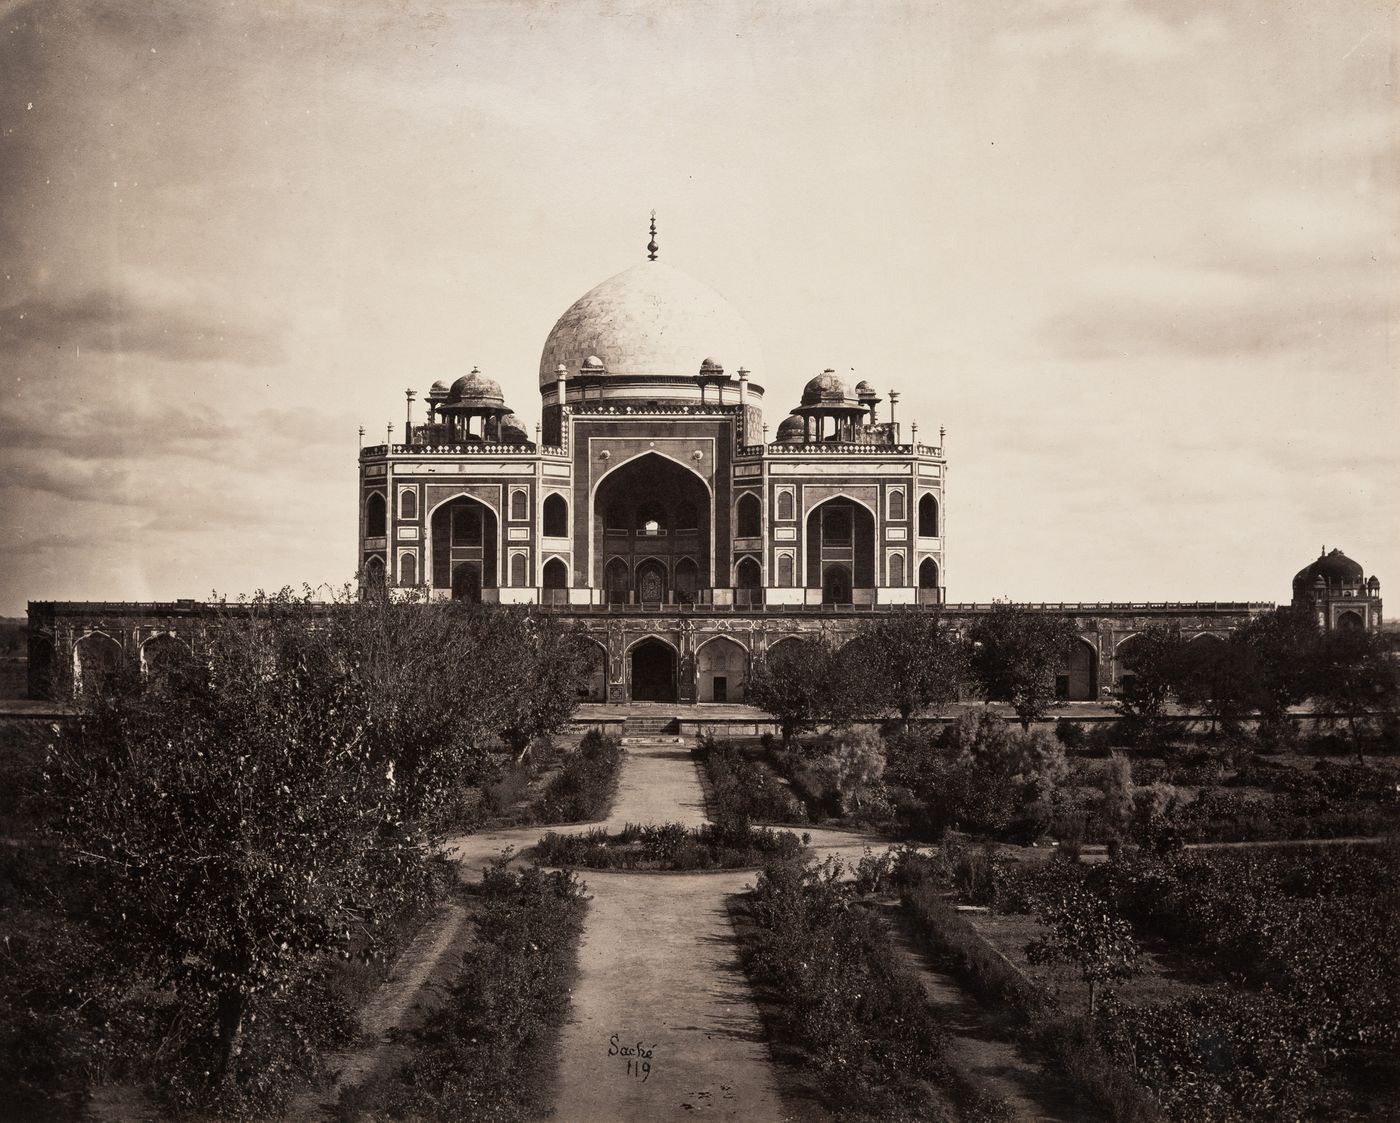 View of Humayun's Tomb, Delhi (now Delhi Union Territory), India